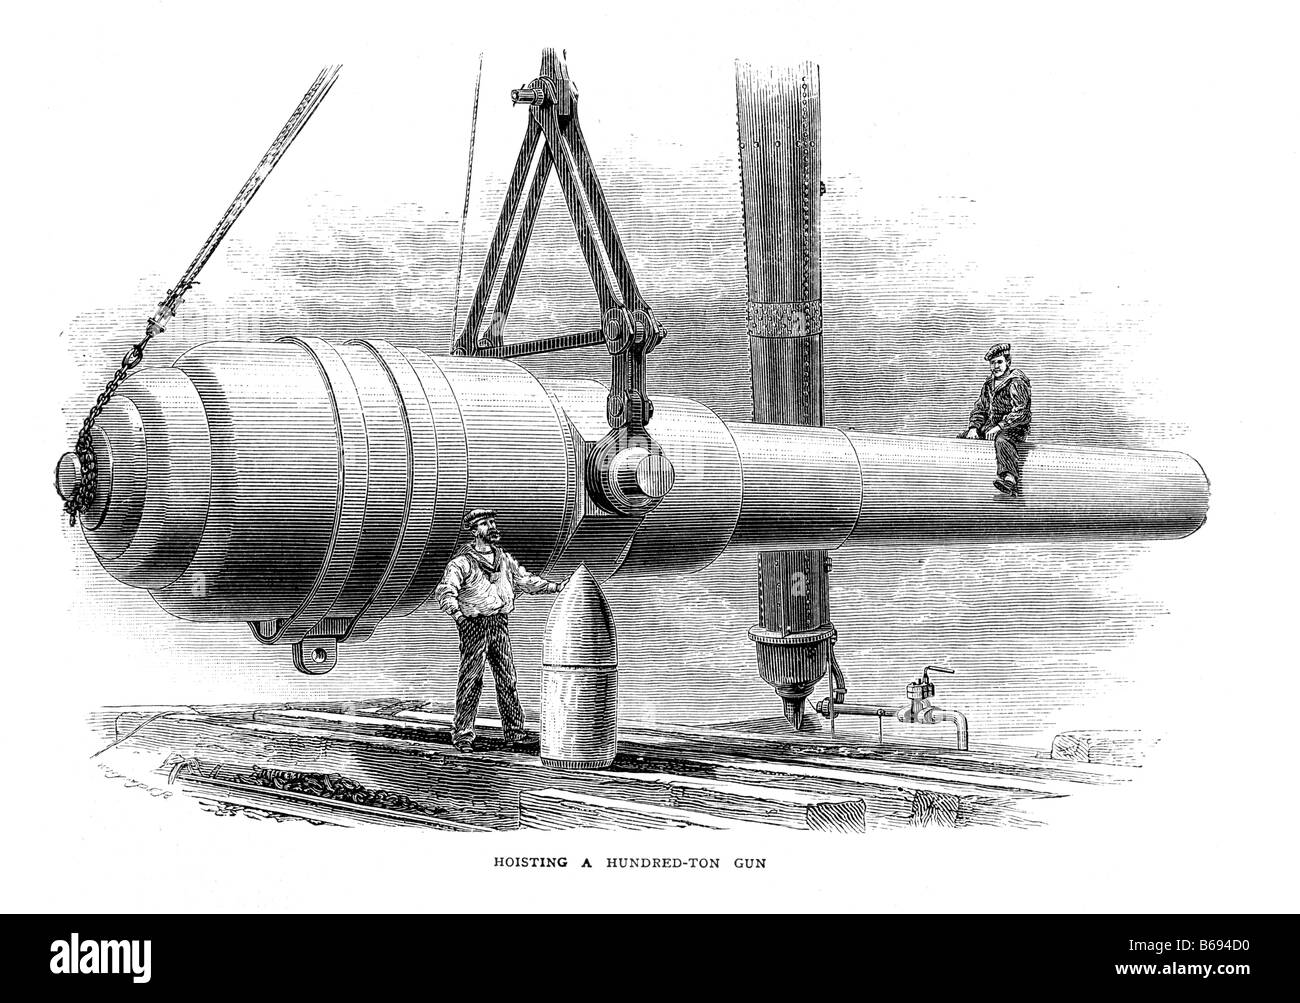 Eine einhundert Tonnen Fang Lade Kanone von W G Armstrong Ltd Elswick Newcastle upon Tyne 19. Jahrhundert Illustration gebaut Stockfoto